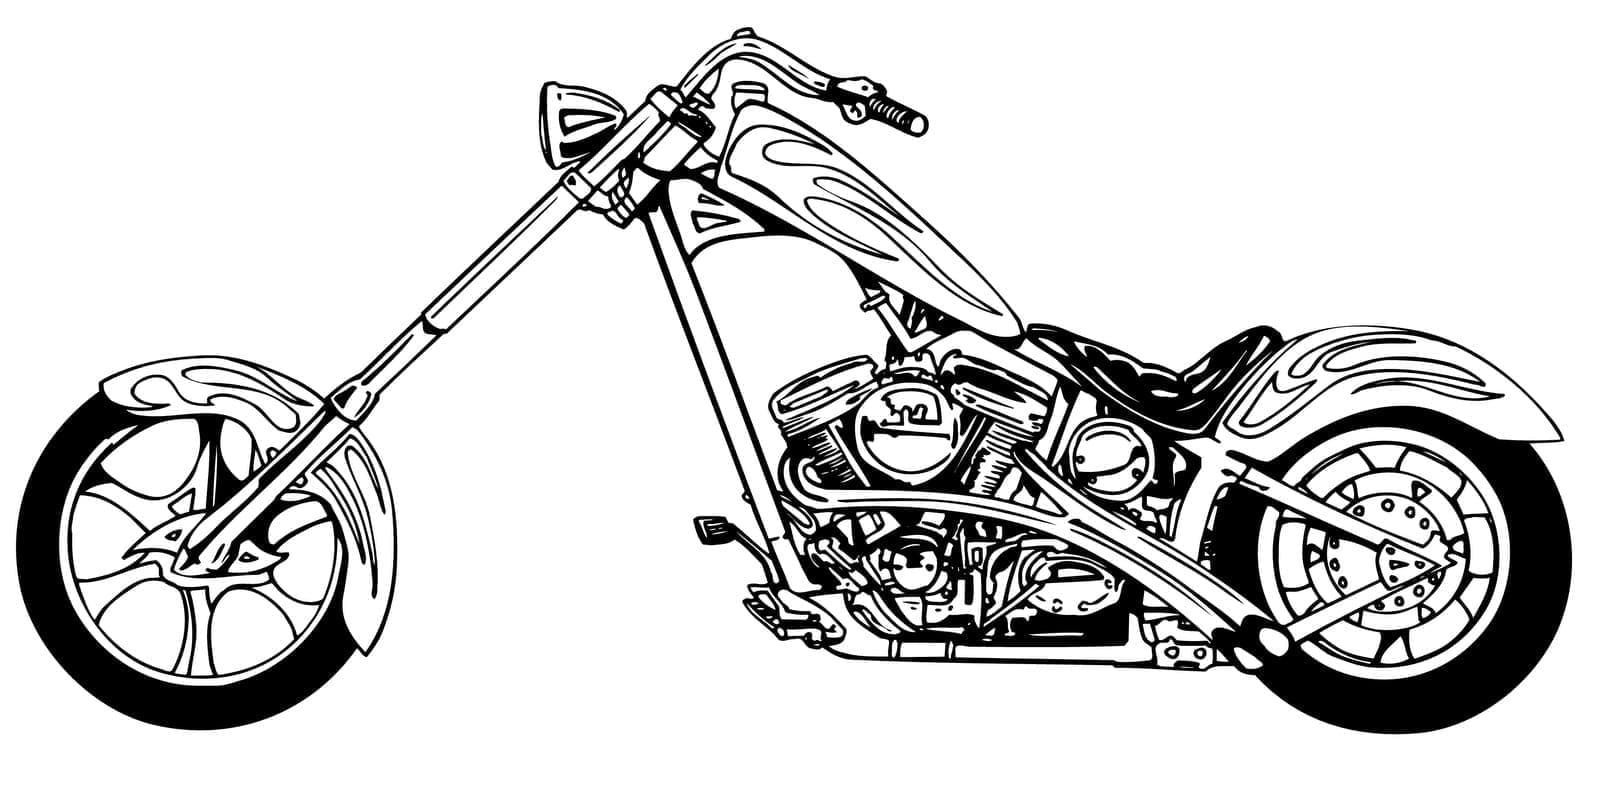 Superbe Moto Harley Davidson coloring page